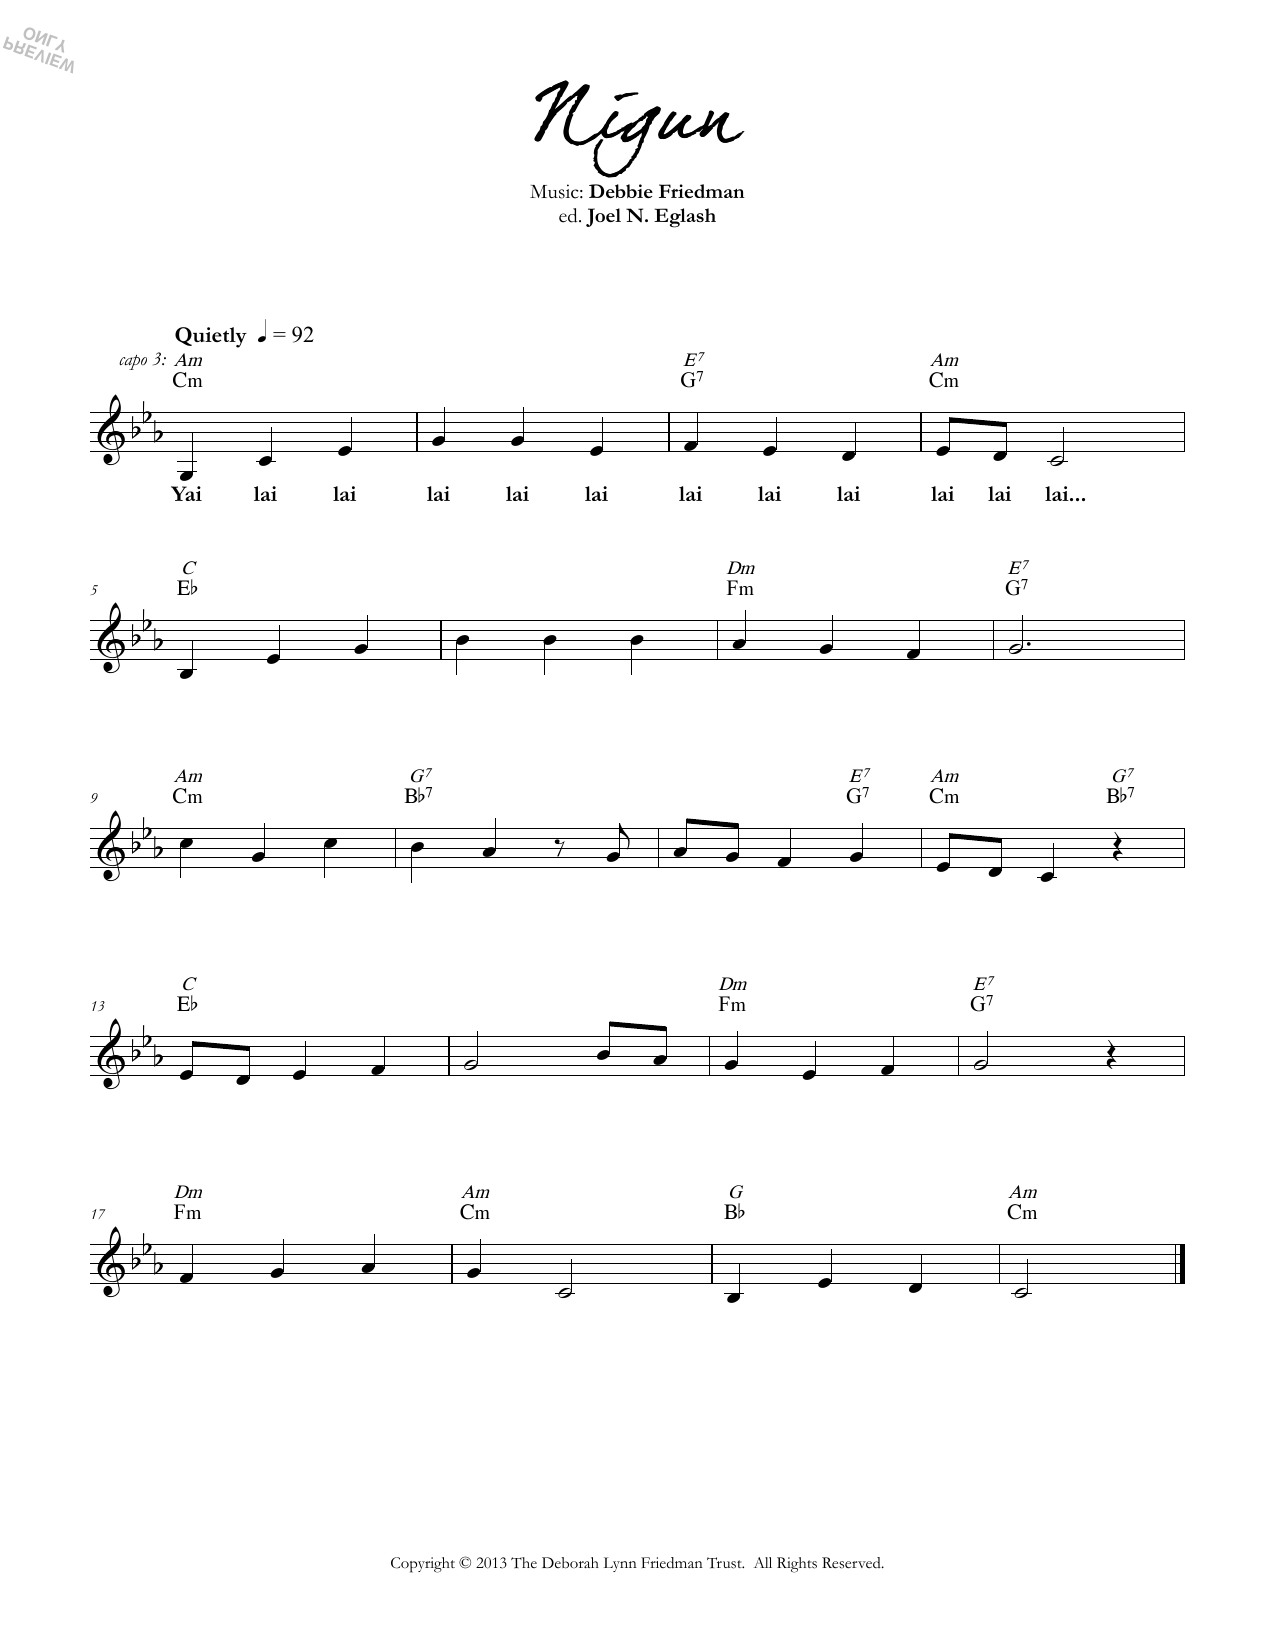 Debbie Friedman Nigun Sheet Music Notes & Chords for Lead Sheet / Fake Book - Download or Print PDF